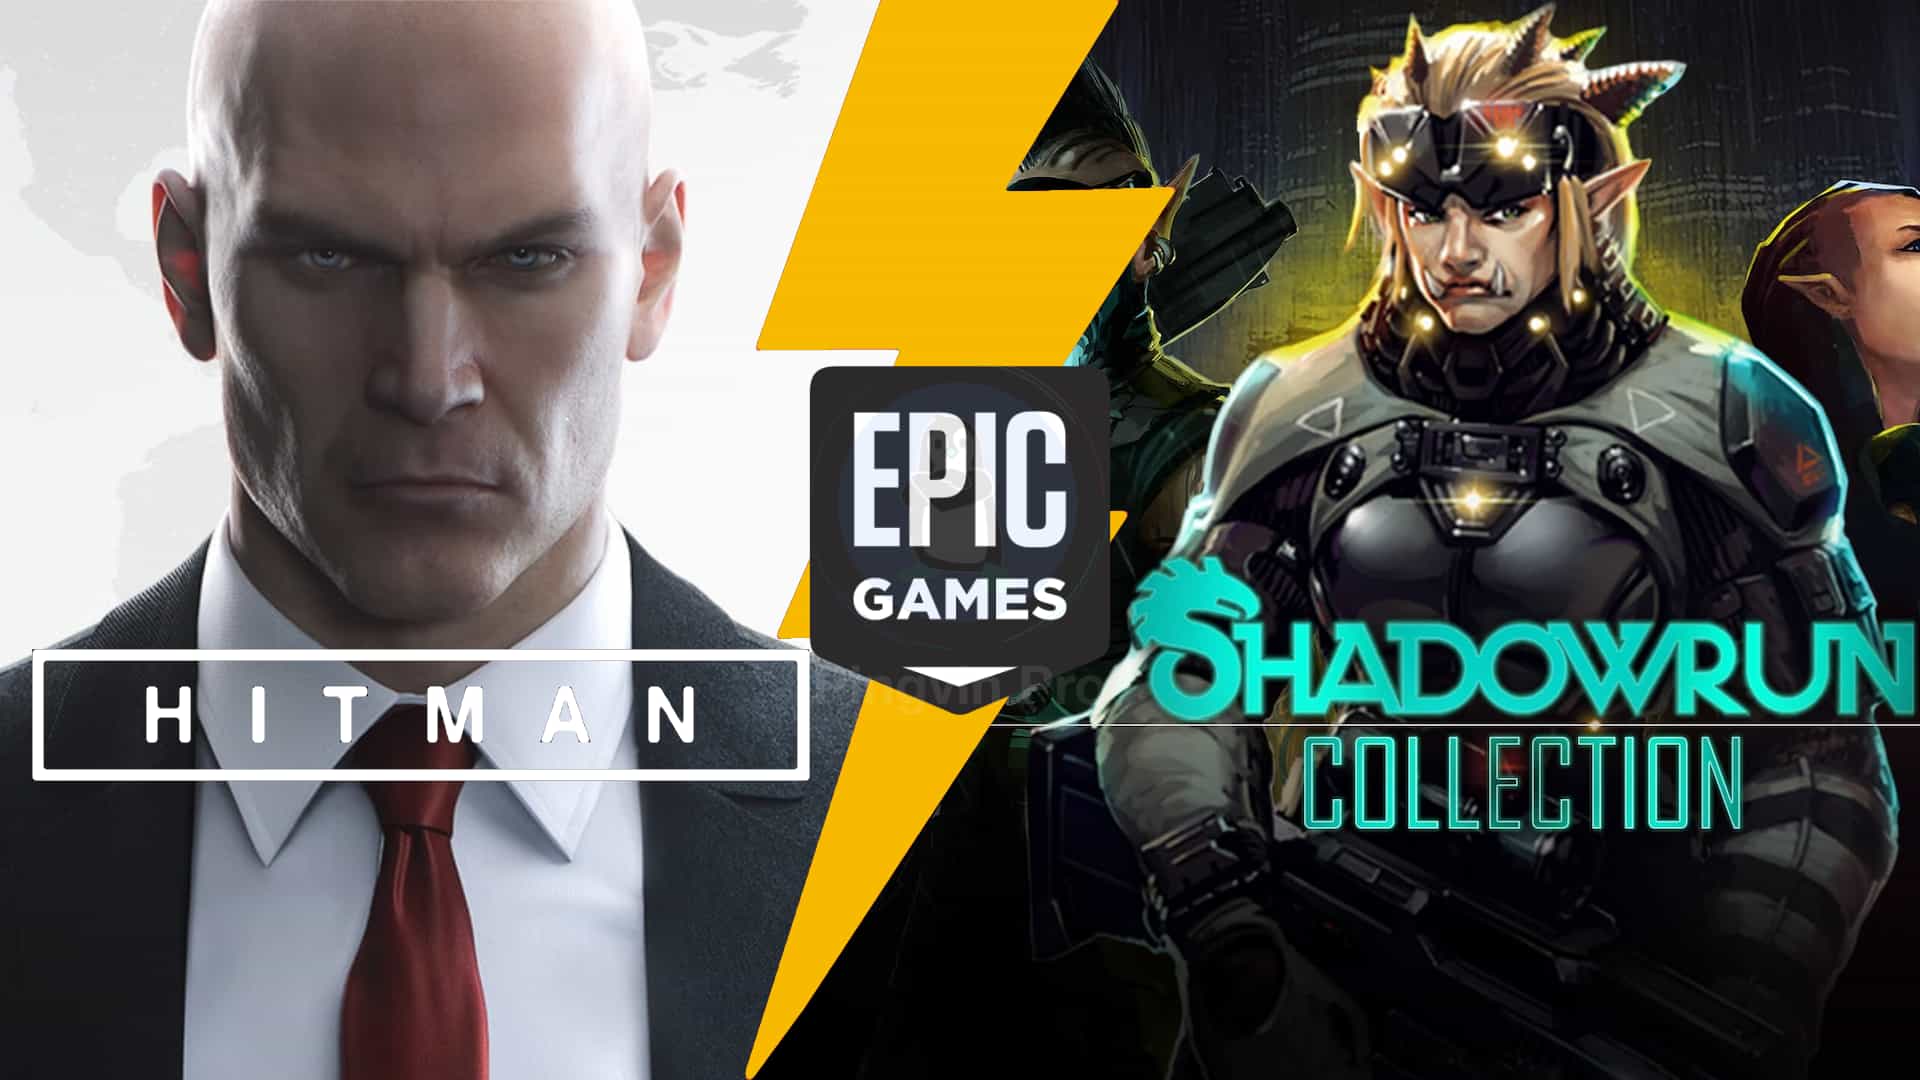 Epic Games - Shadowrun Collection - Hitman